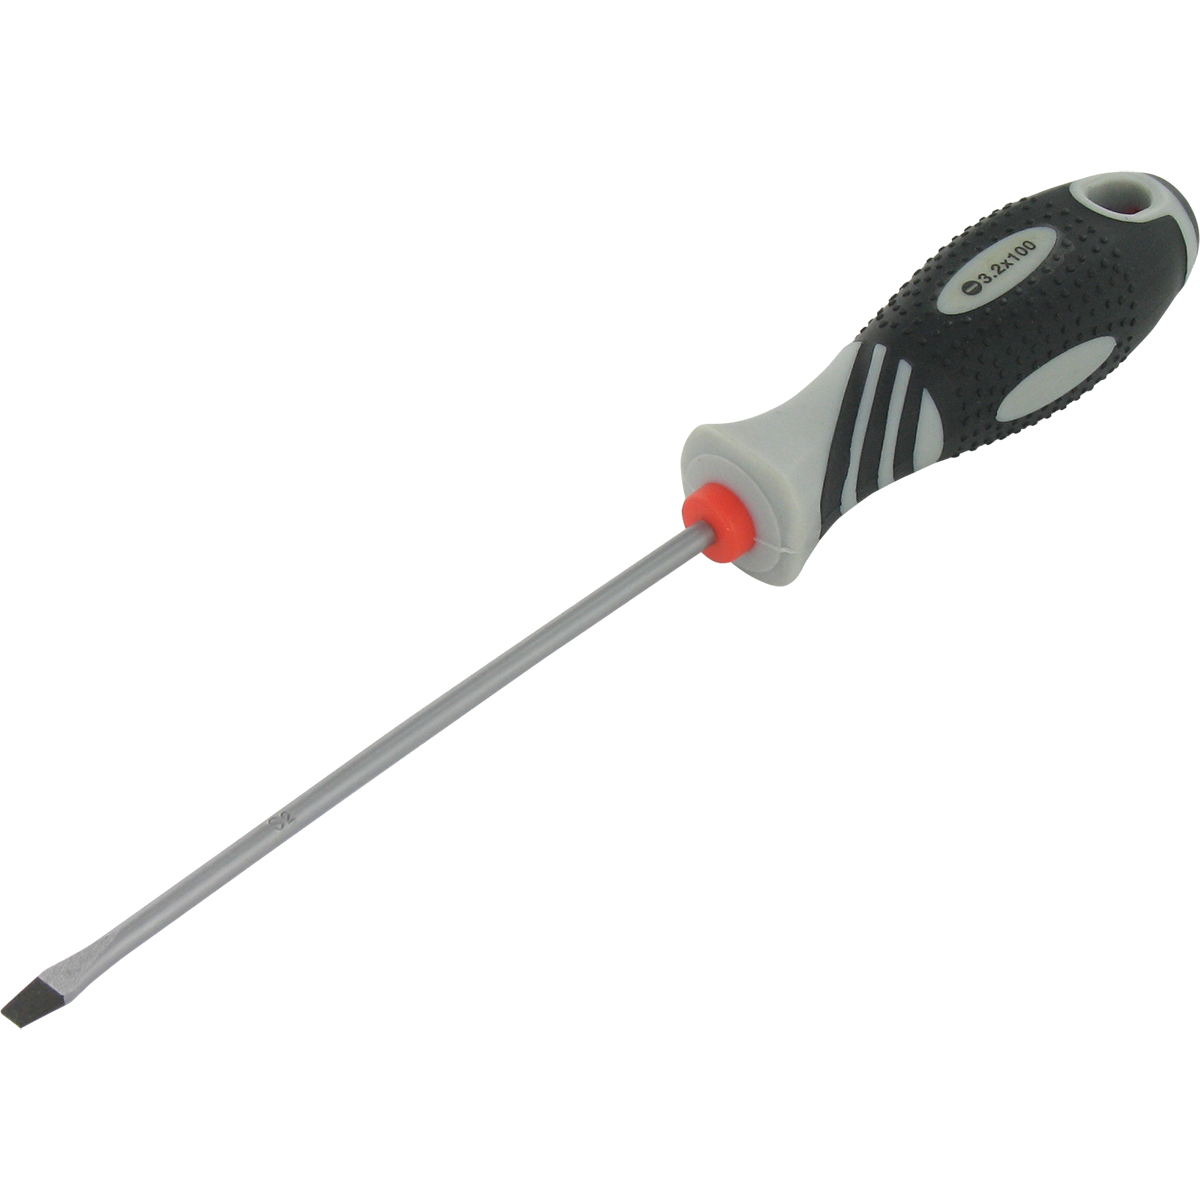 Professional screwdriver - 3,2mm flat blade